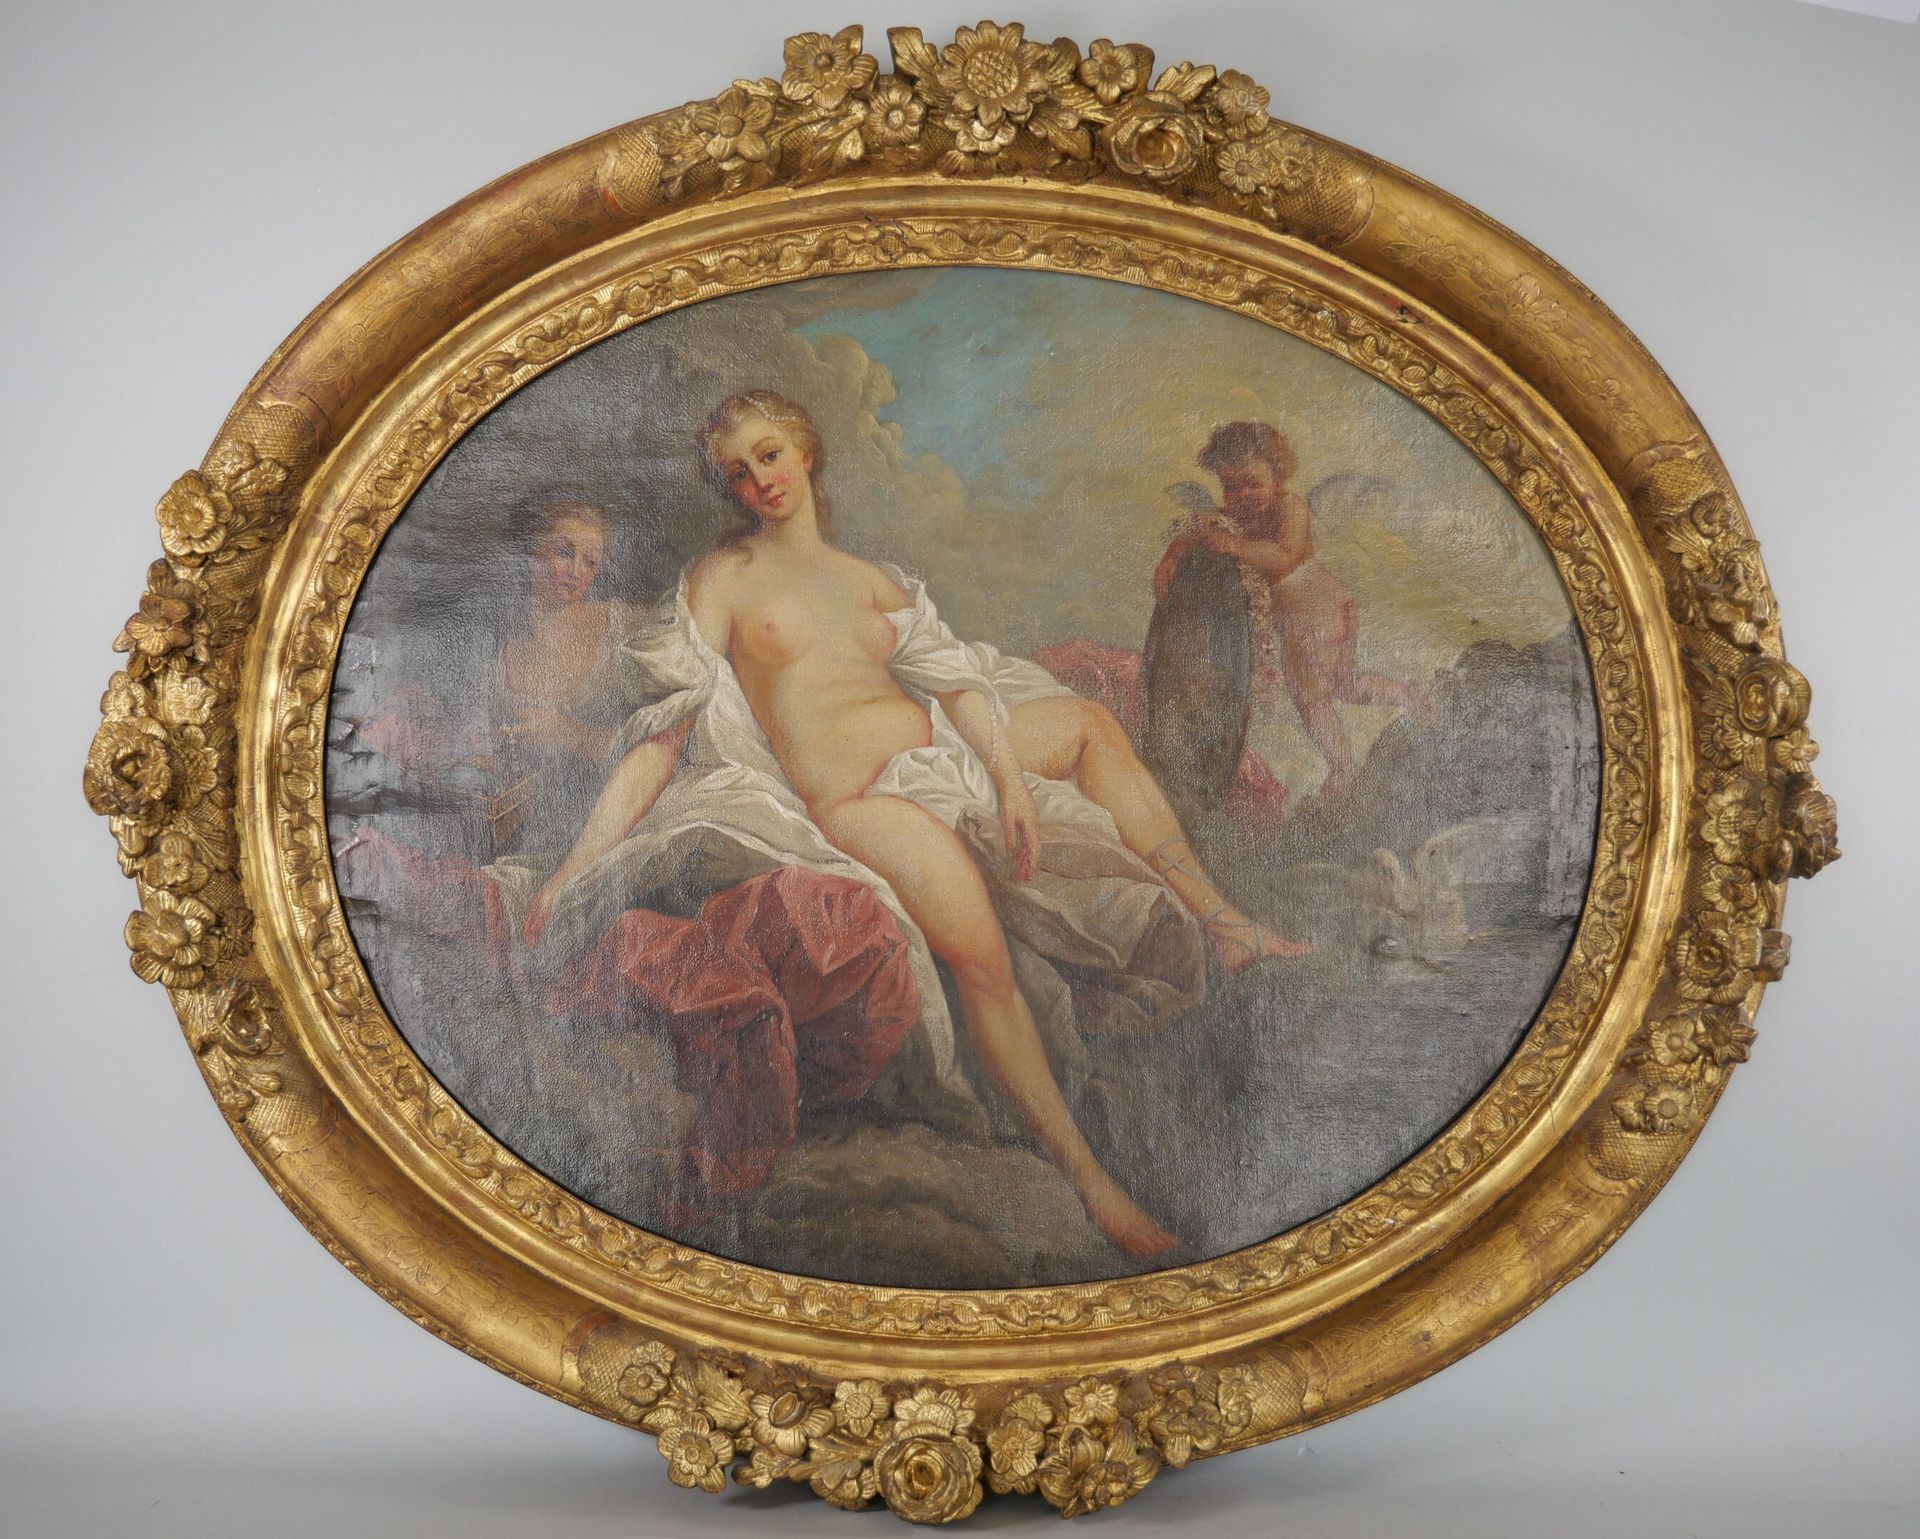 Null 19th century FRENCH school after François Boucher
Venus at her toilette
Ova&hellip;